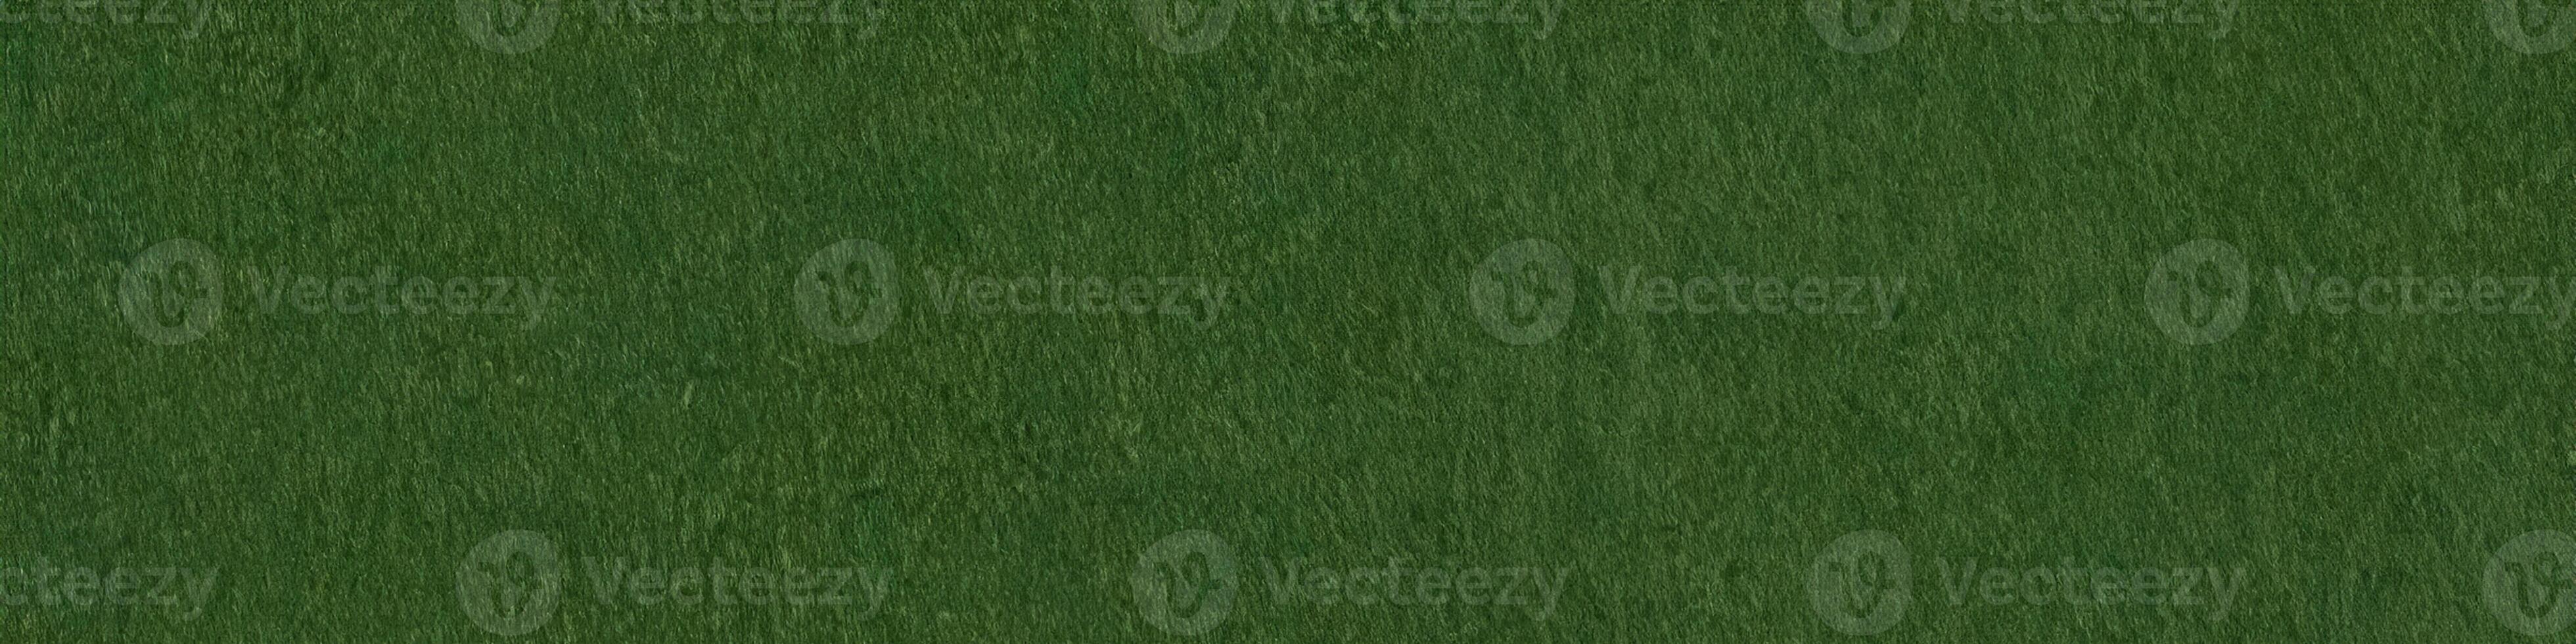 macro tiro do verde sentido pano. panorâmico desatado textura, Patt foto